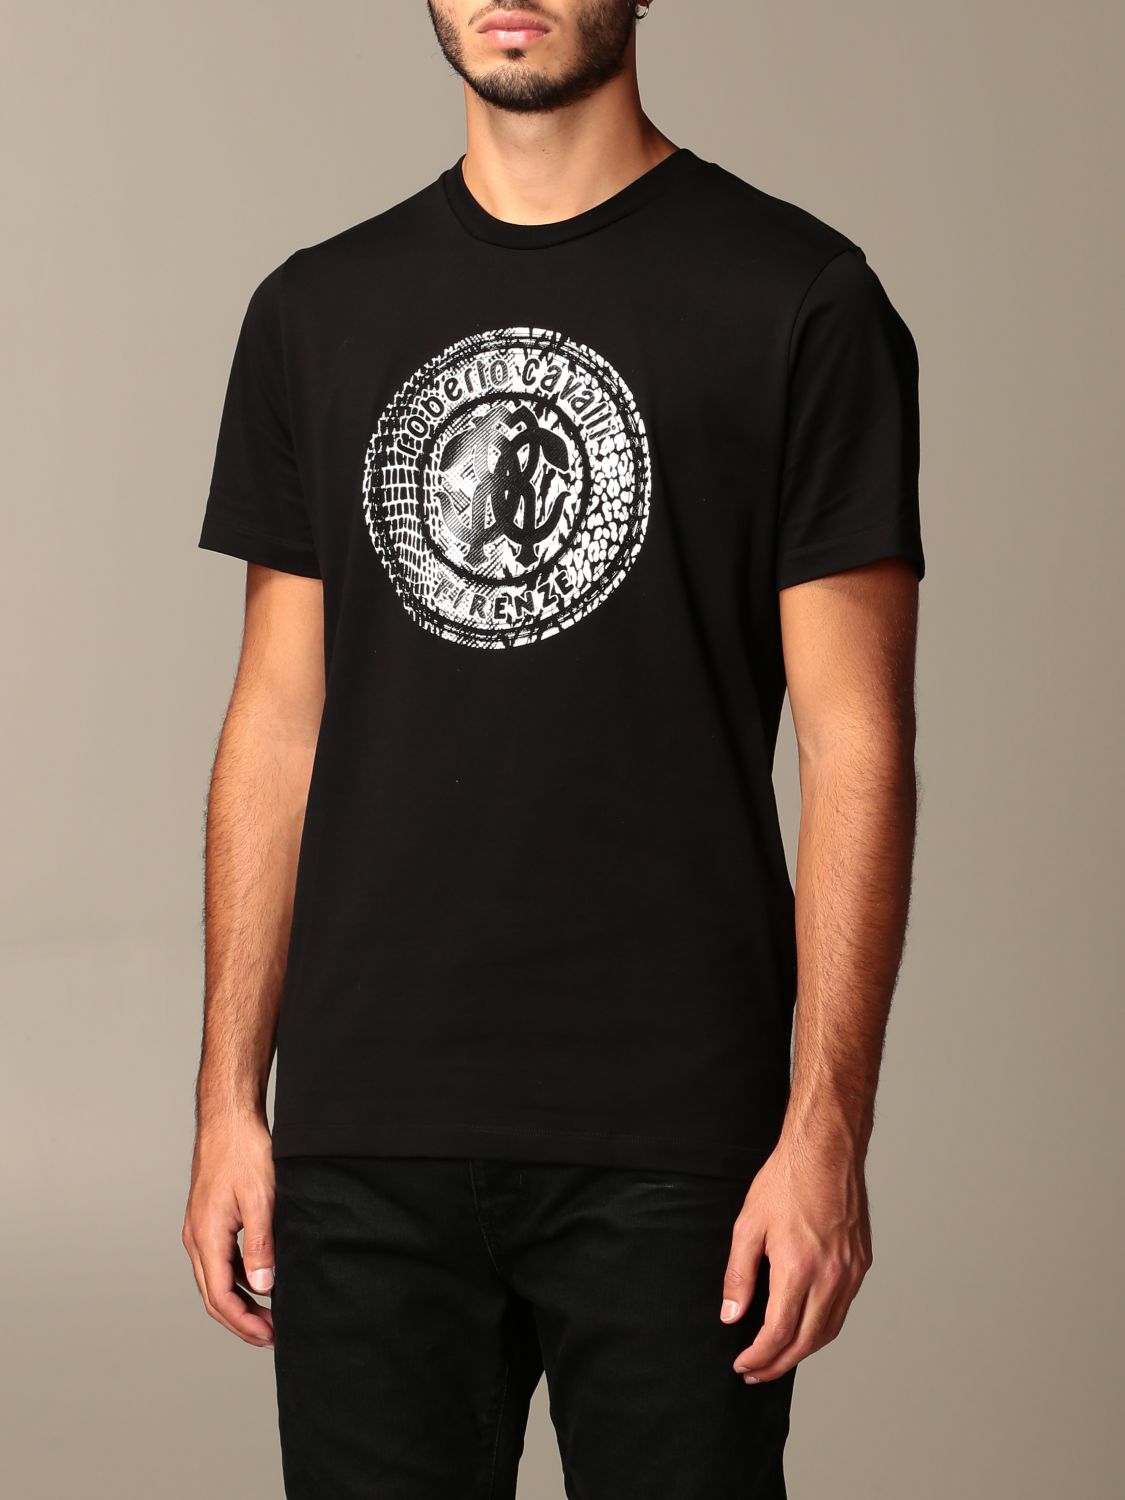 Roberto Cavalli Outlet: t-shirt for men - Black | Roberto Cavalli t ...